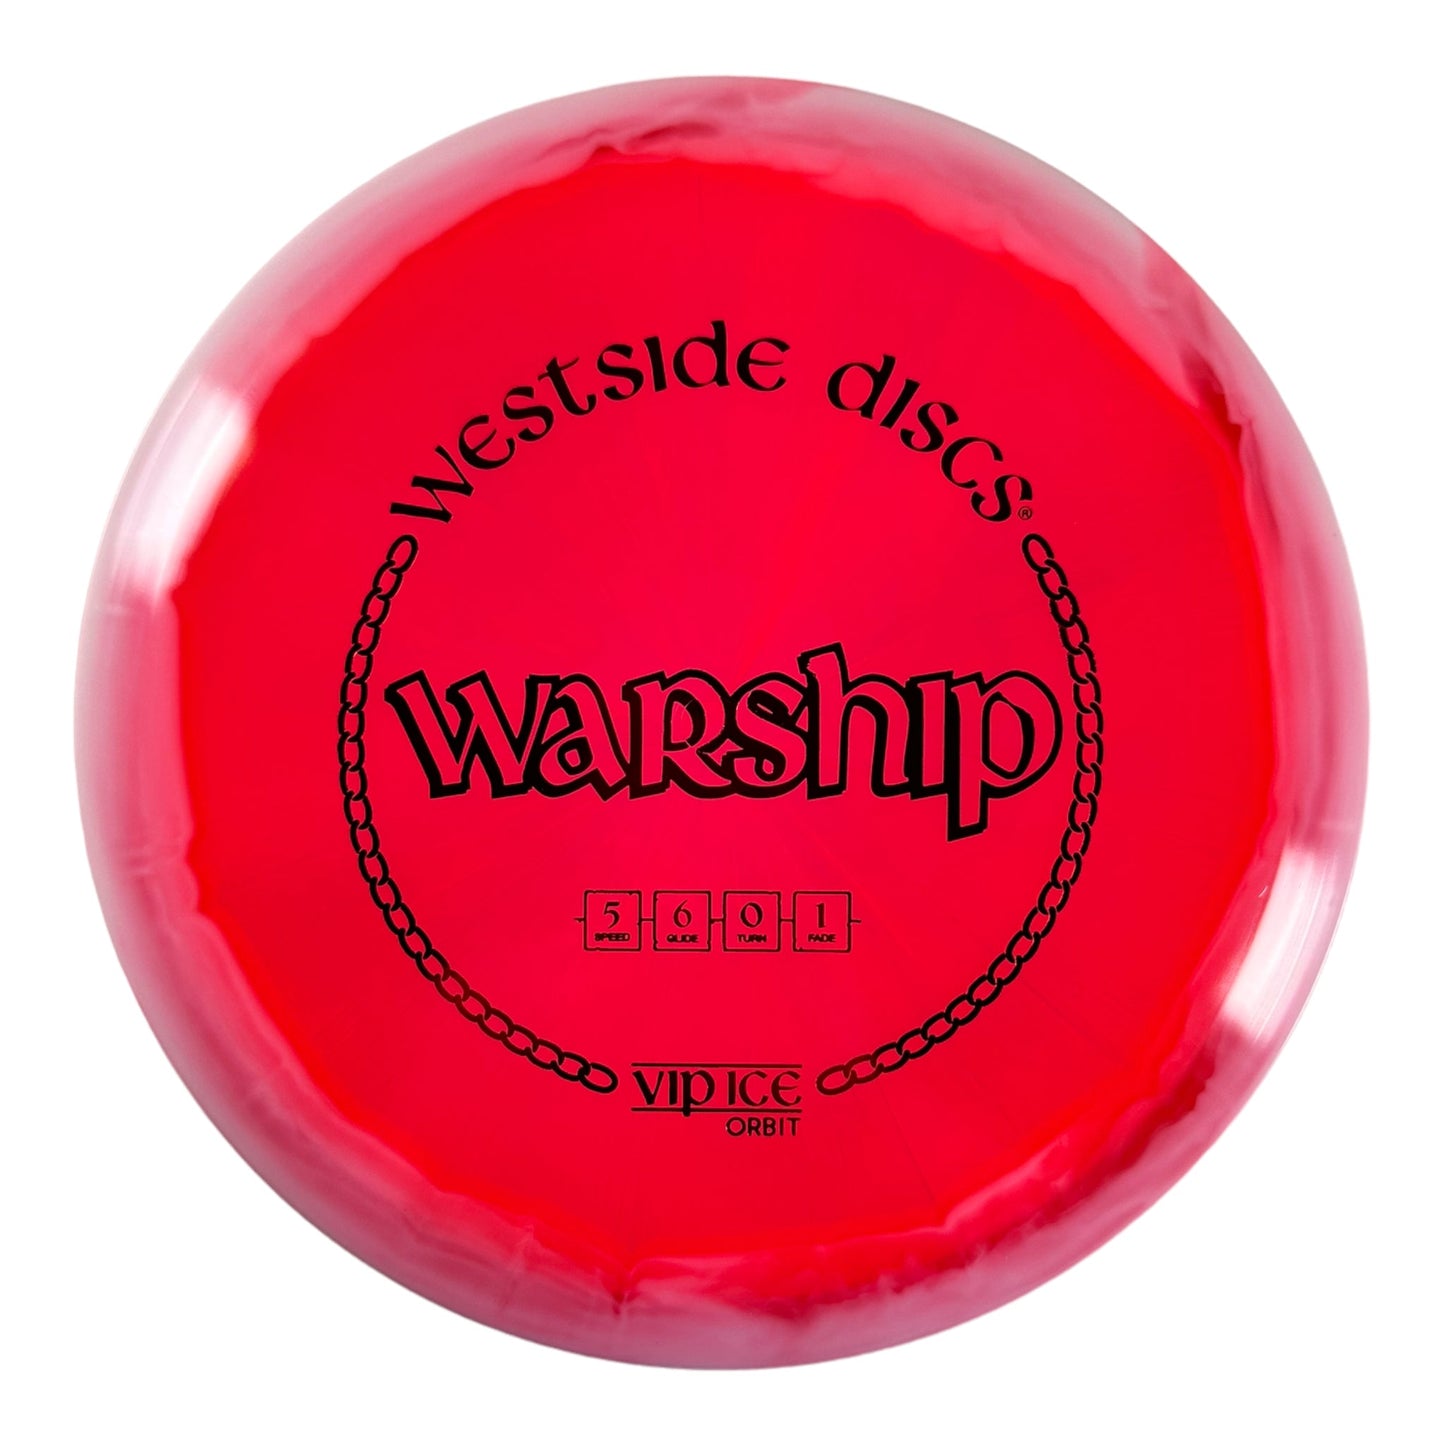 Westside Discs Warship | VIP Ice Orbit | Red/Red 177g Disc Golf